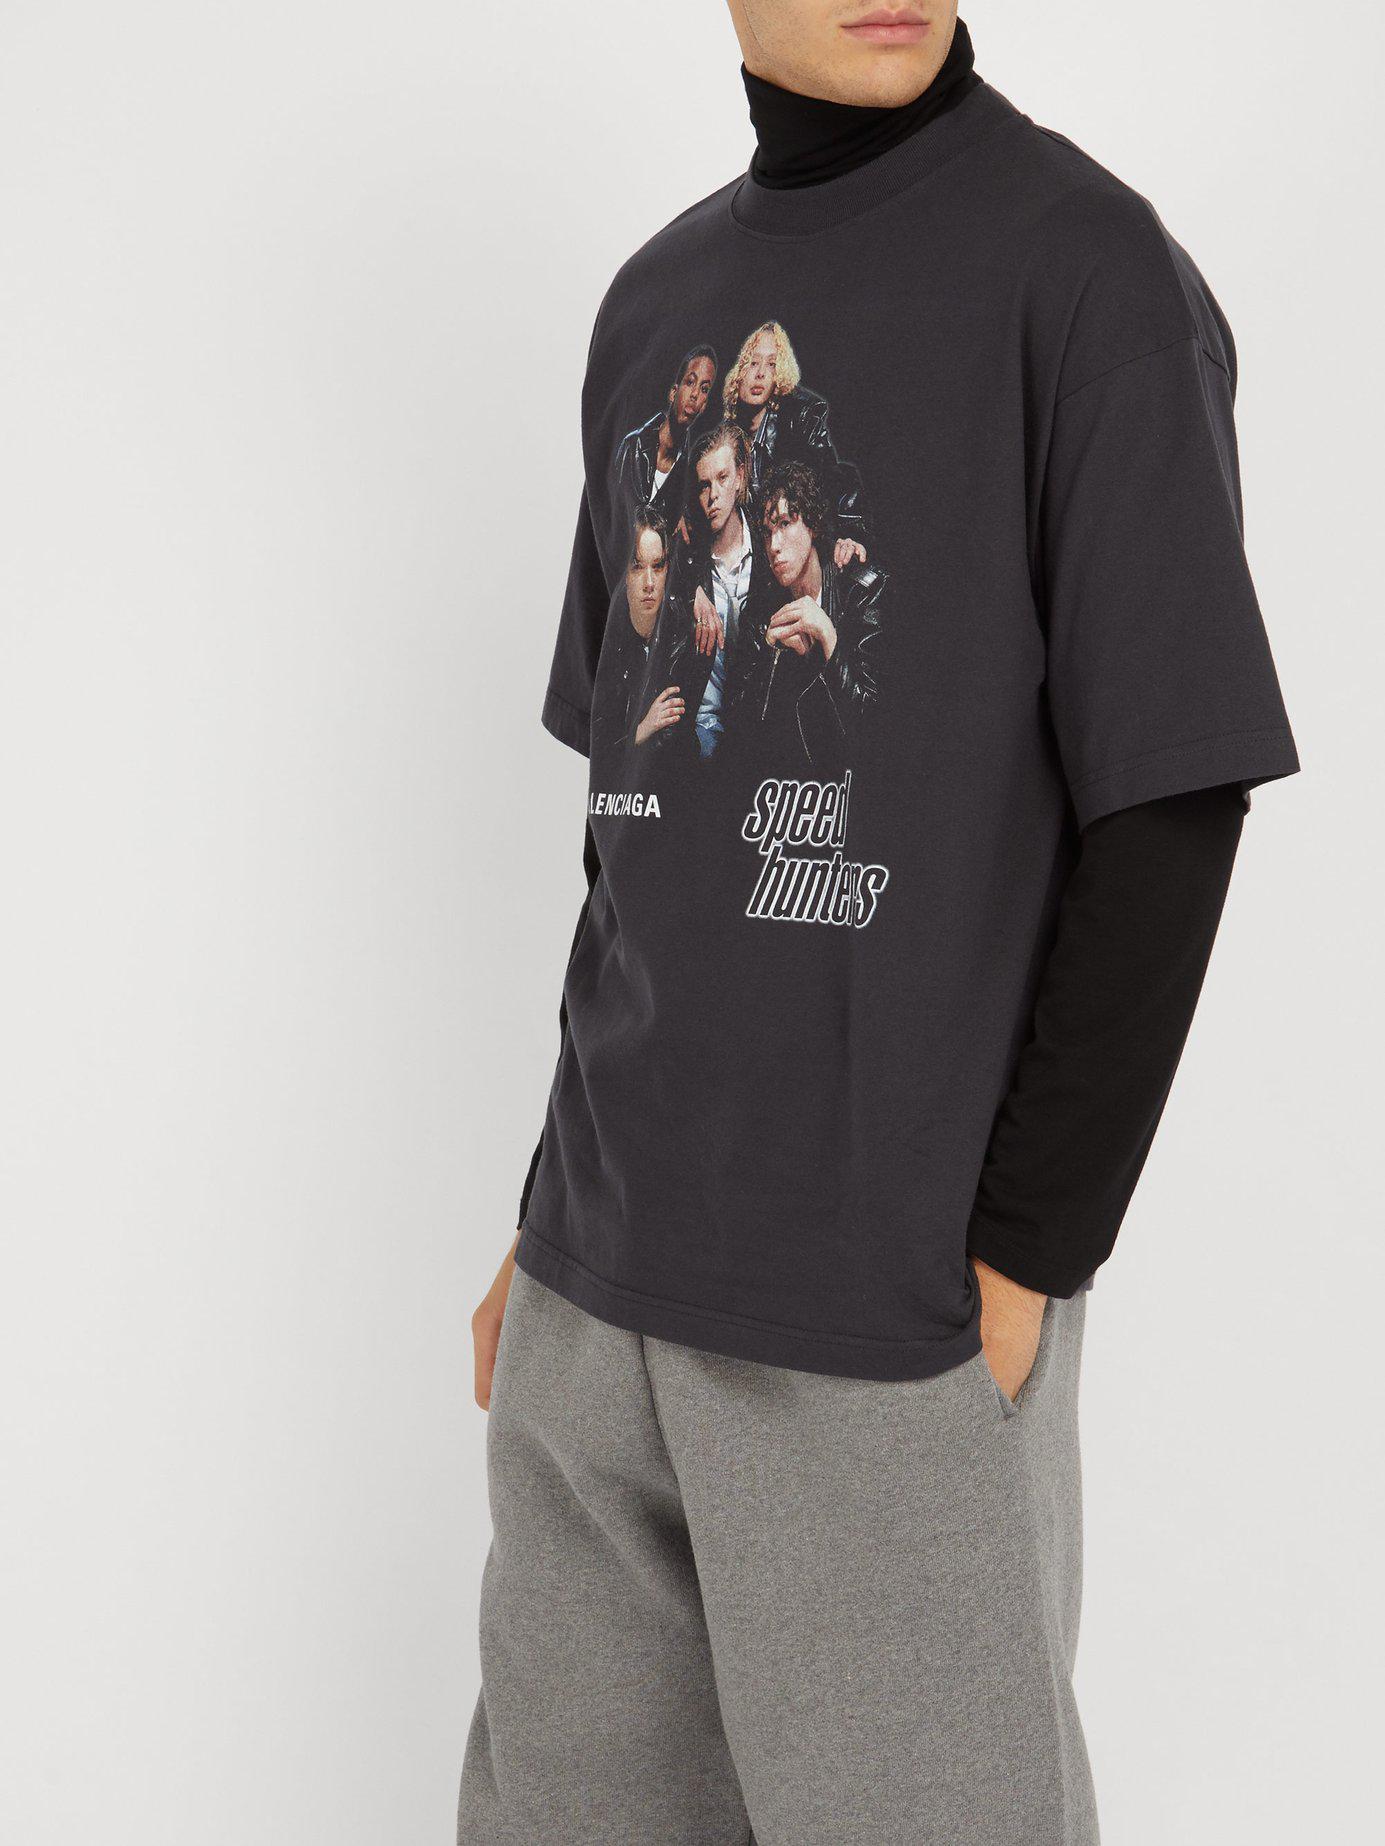 Balenciaga Cotton Speedhunters T-shirt for Men - Lyst